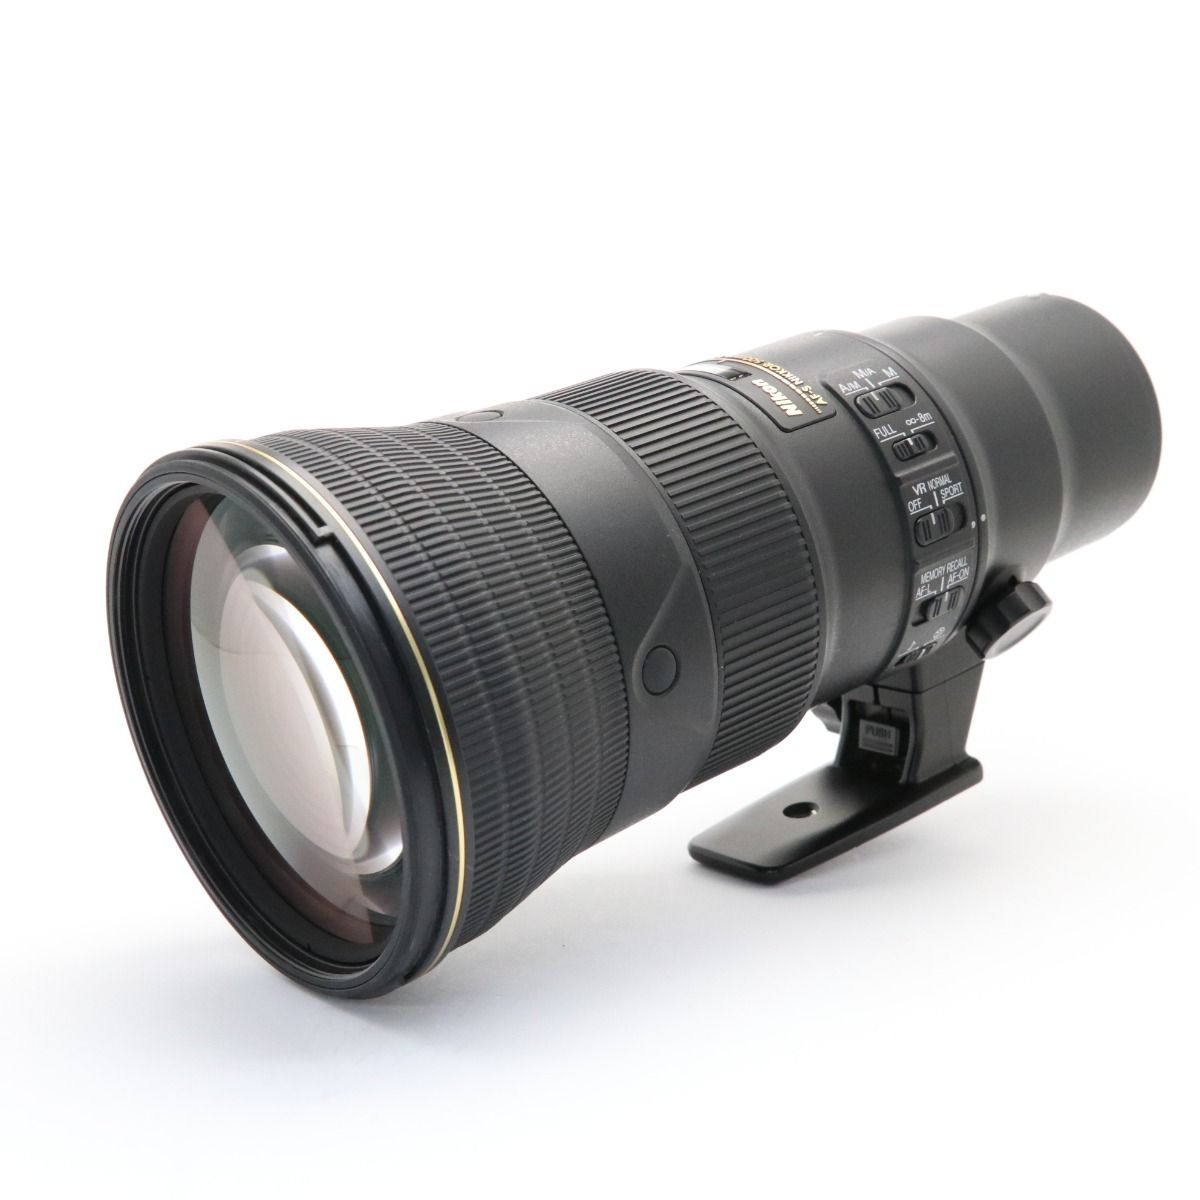 Nikon 500mm f5.6 E PF ED VR AF-S Super-Telephoto Lens